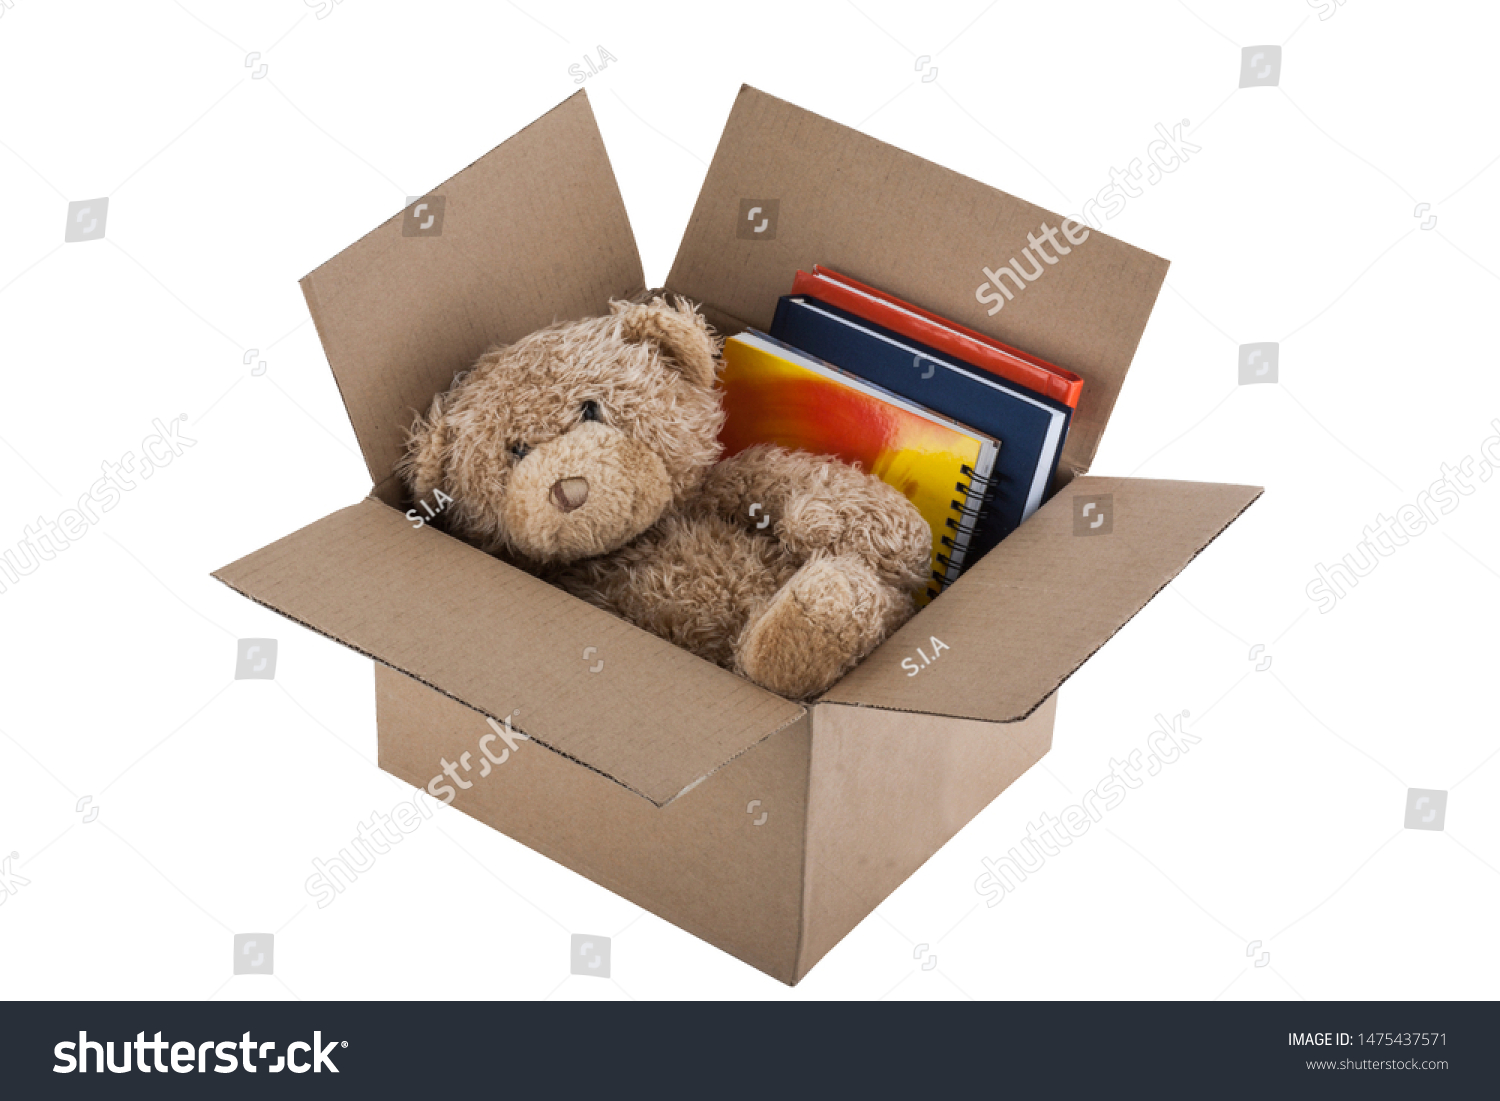 teddy bear in box